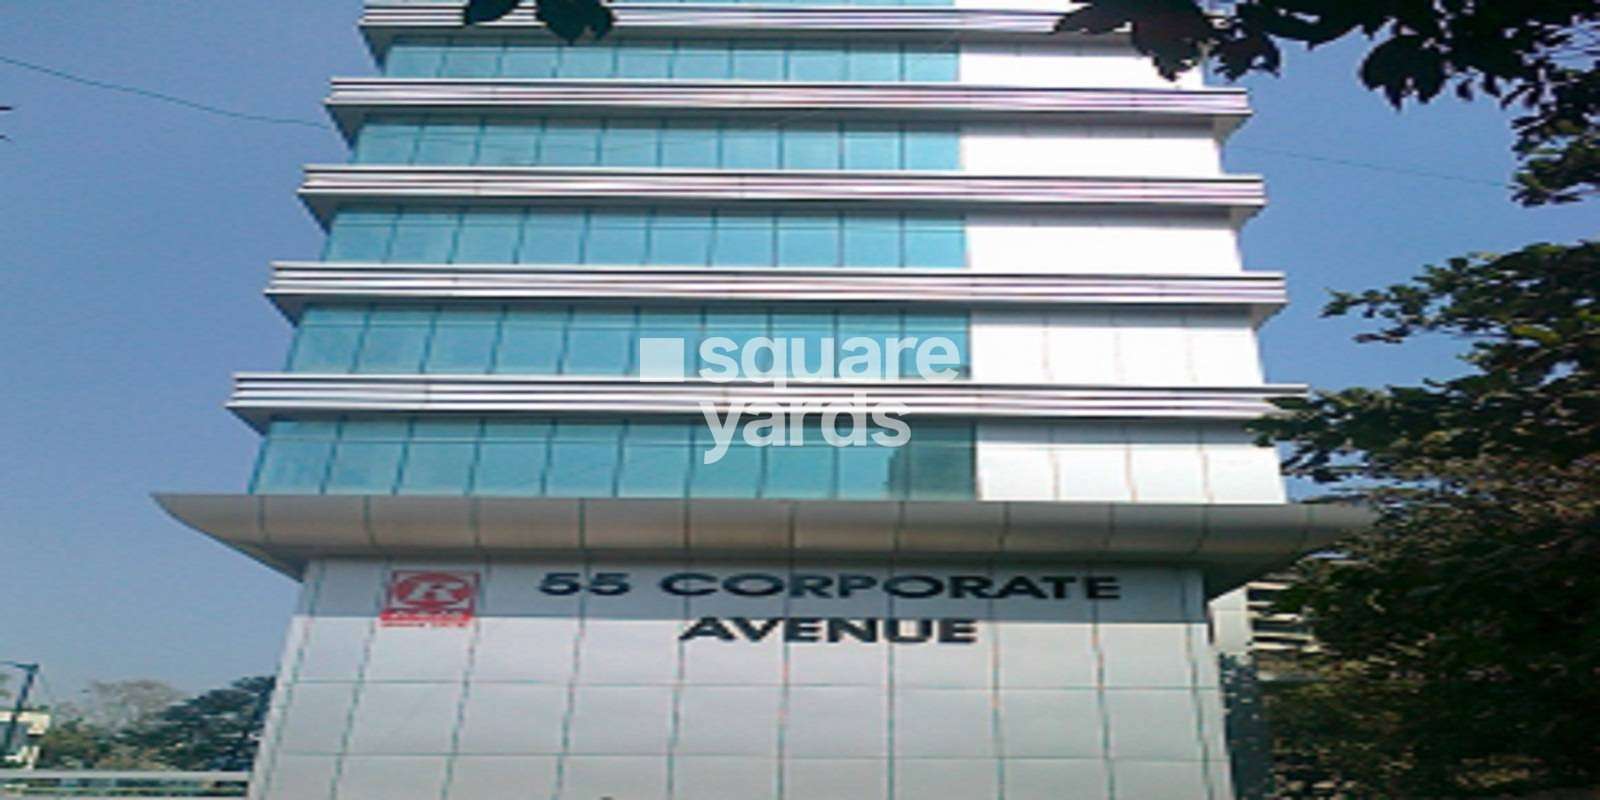 55 Corporate Avenue Cover Image